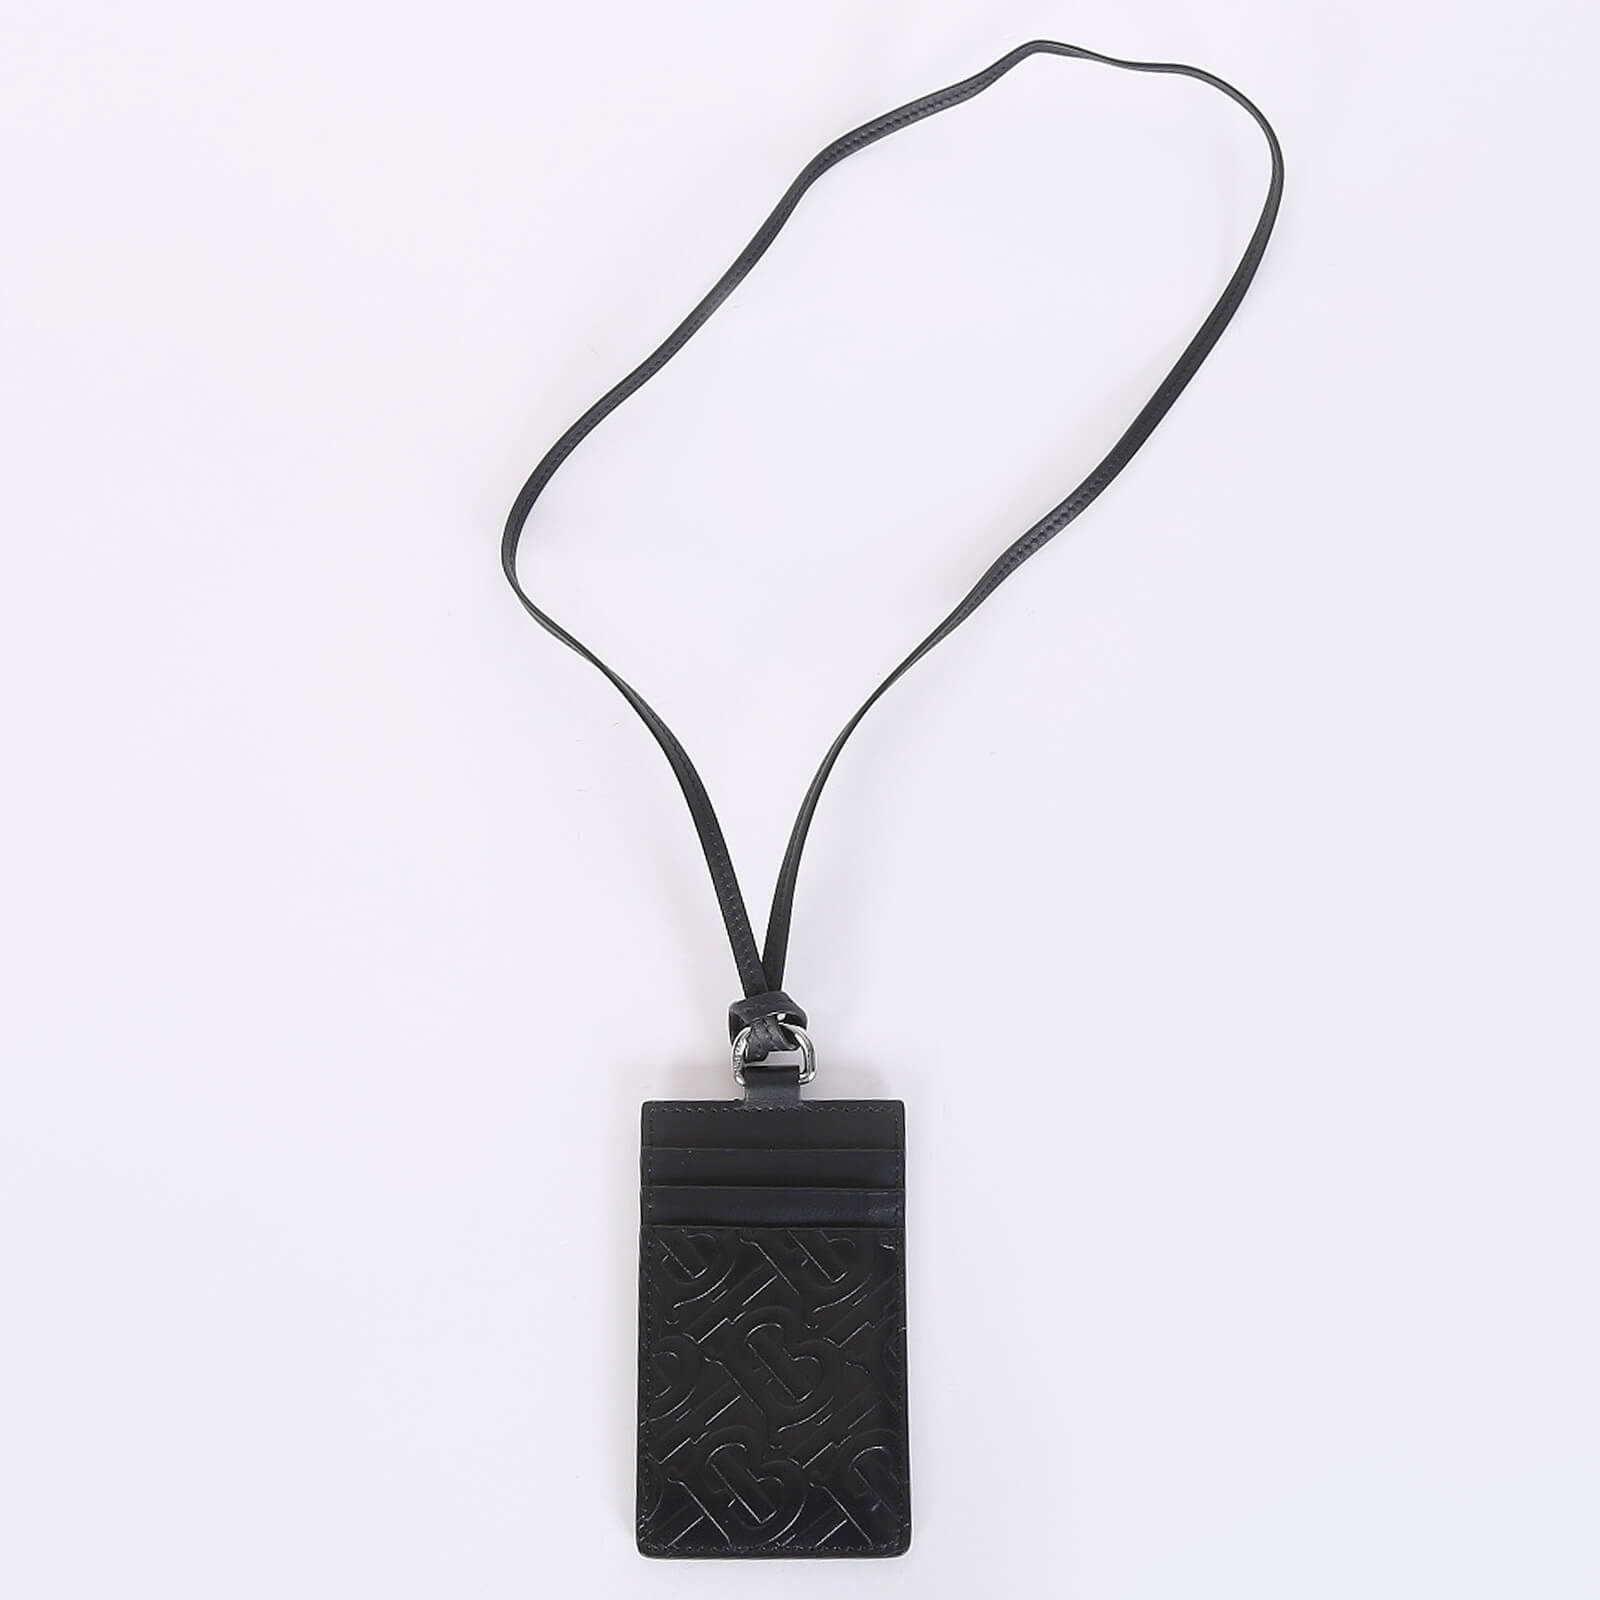 Reel Lanyard Badge Holder Necklace DIY Beaded Lanyard with ID Card Holders  | eBay